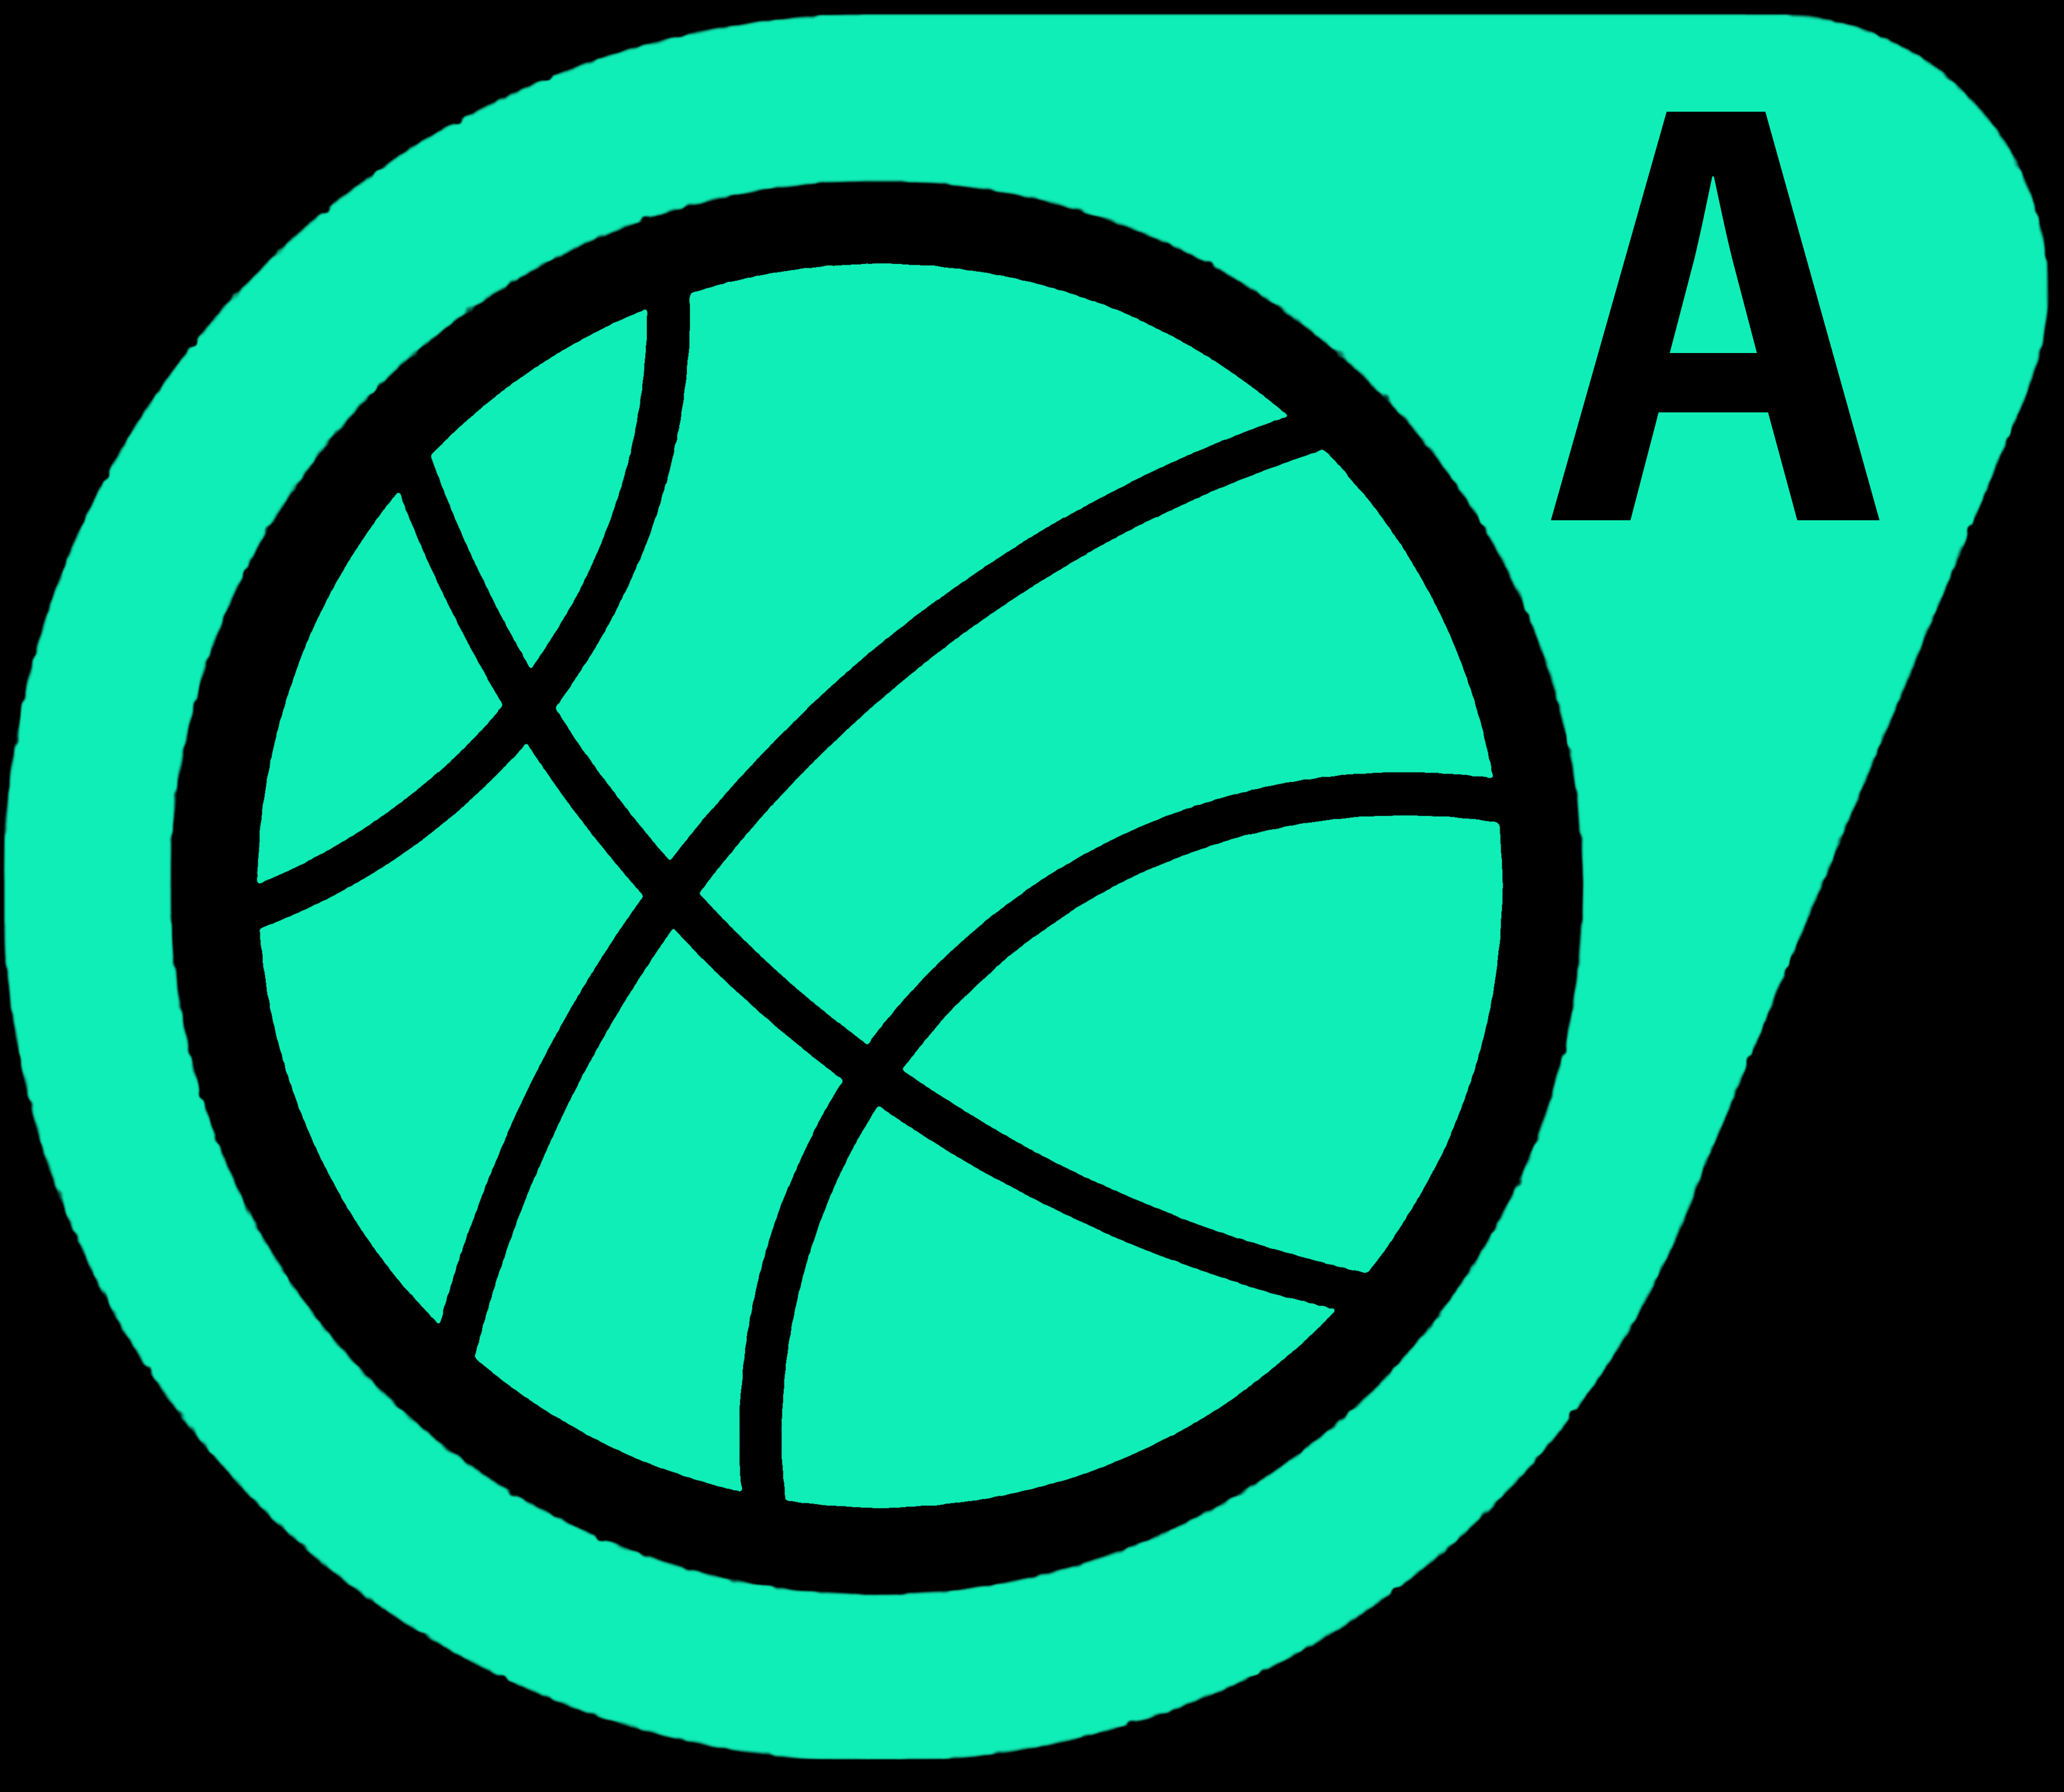 half life alyx logo